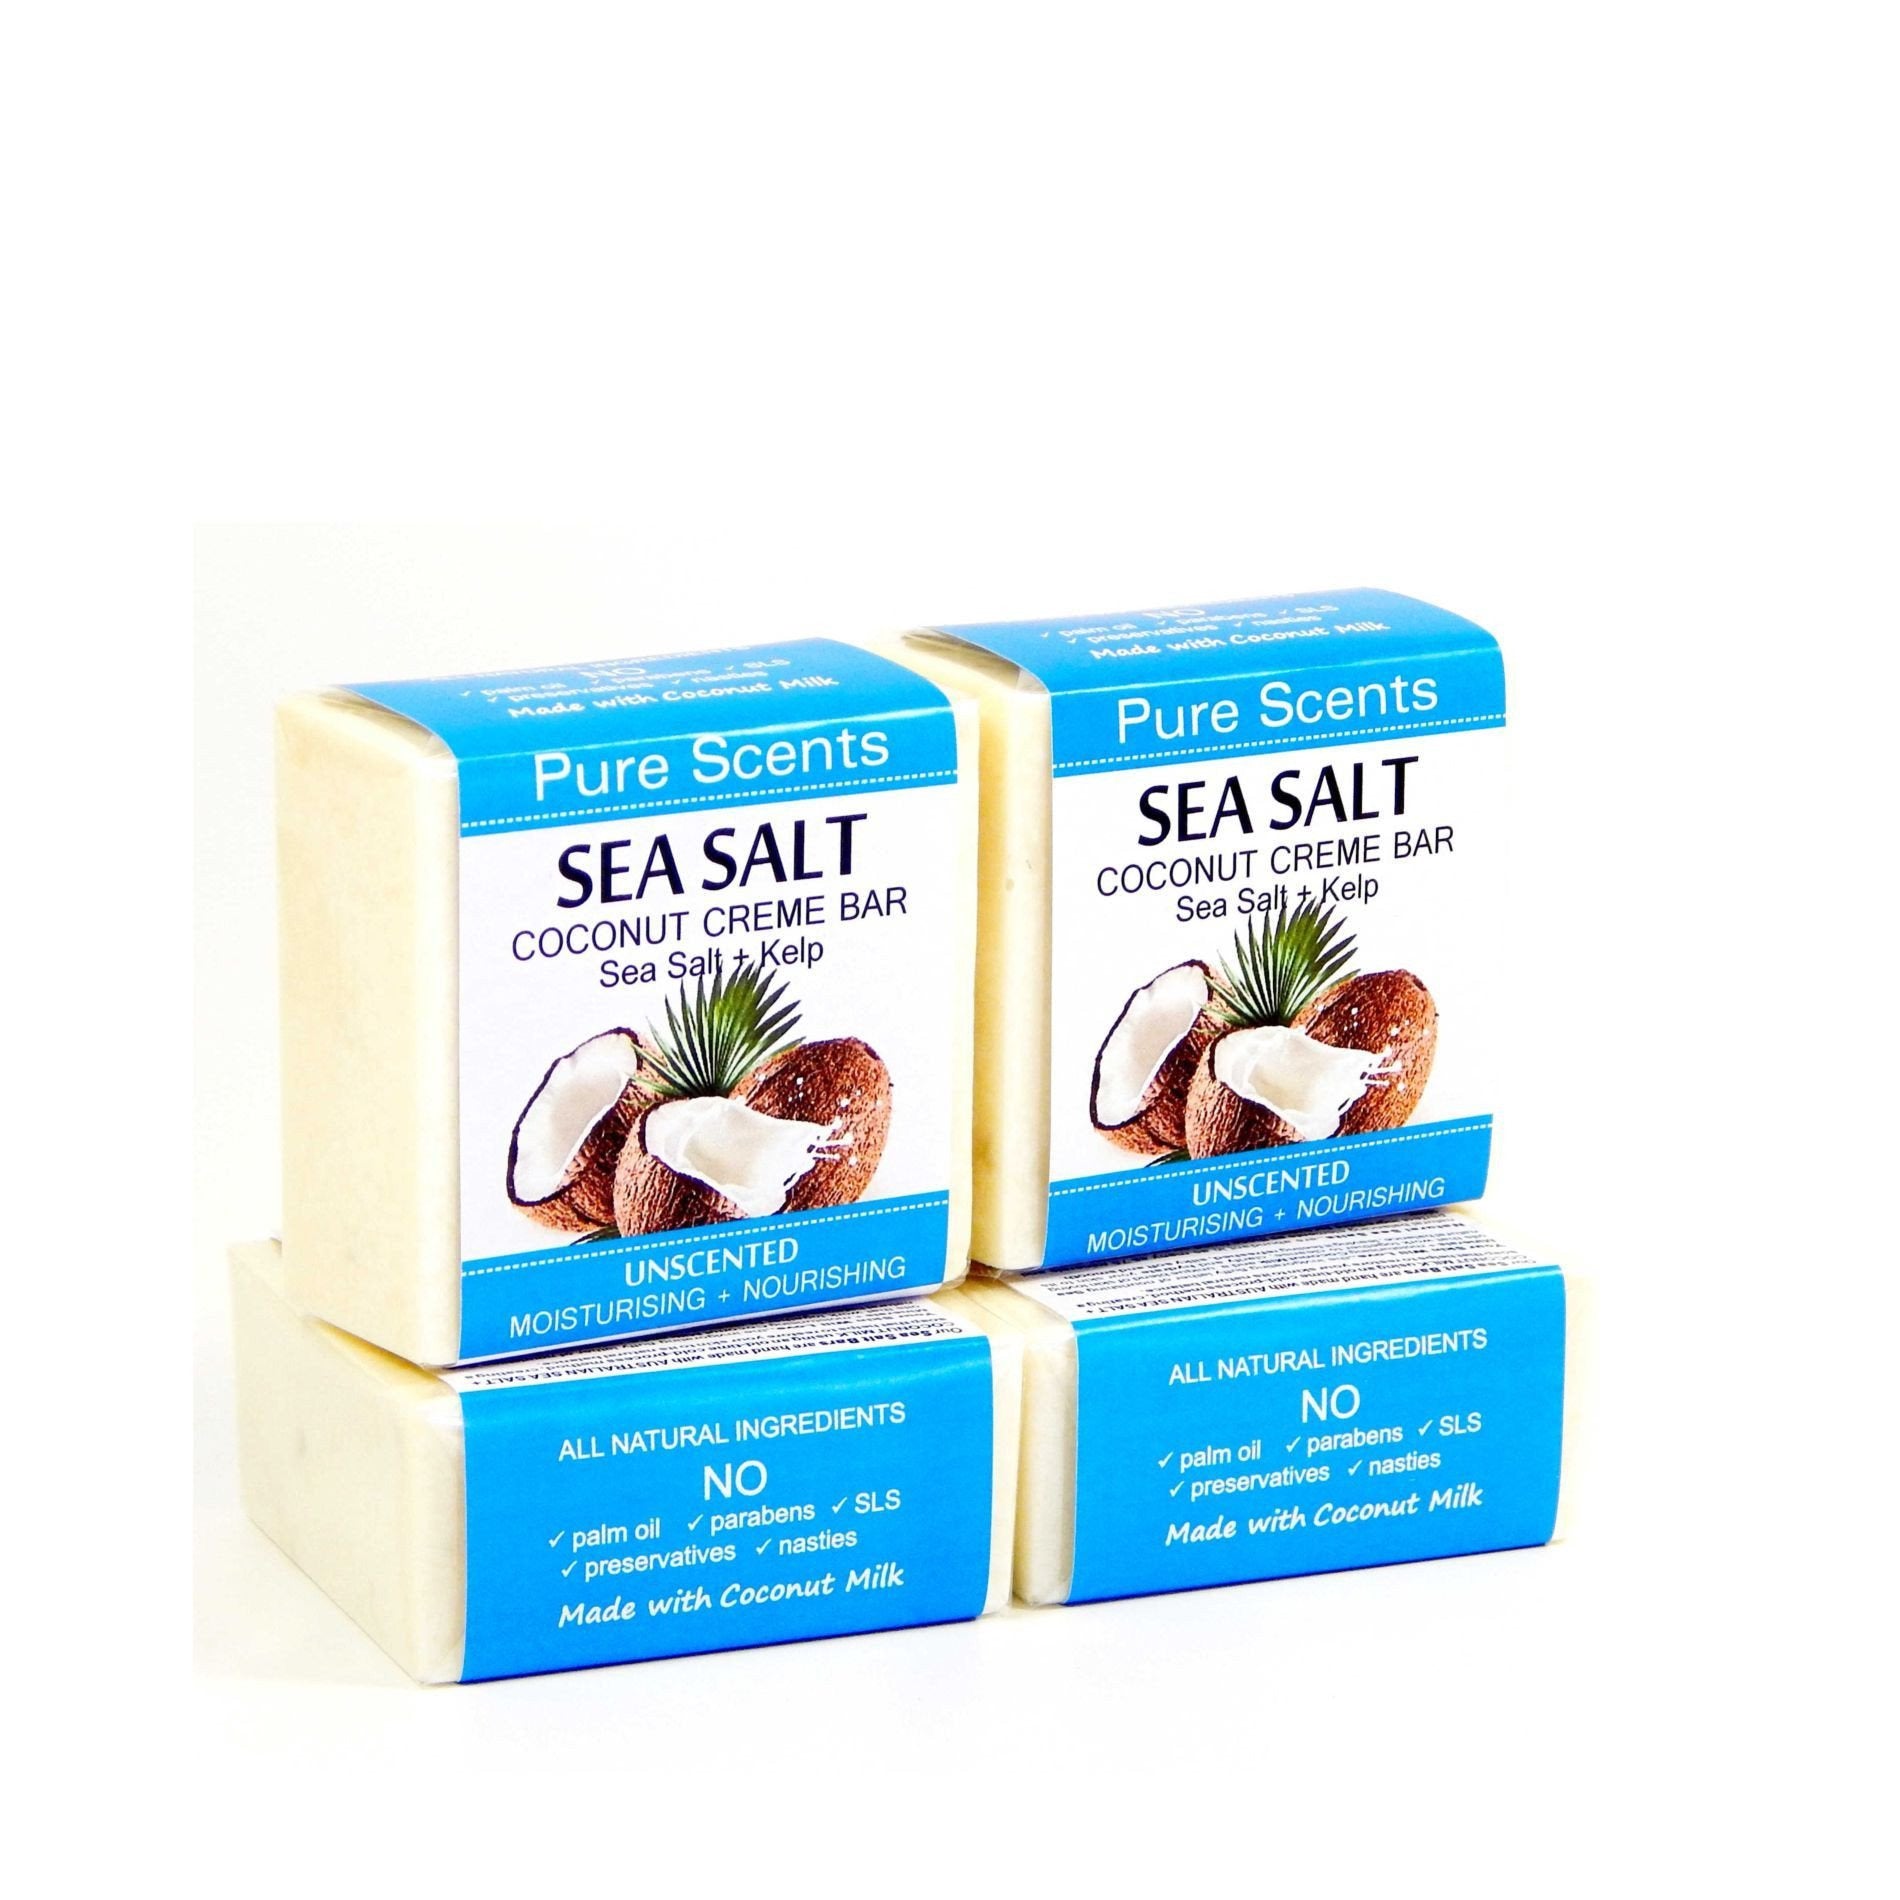 Sea Salt & Coconut Creme Soap Bars - Kelp Unscented Value Pack - Pure Scents